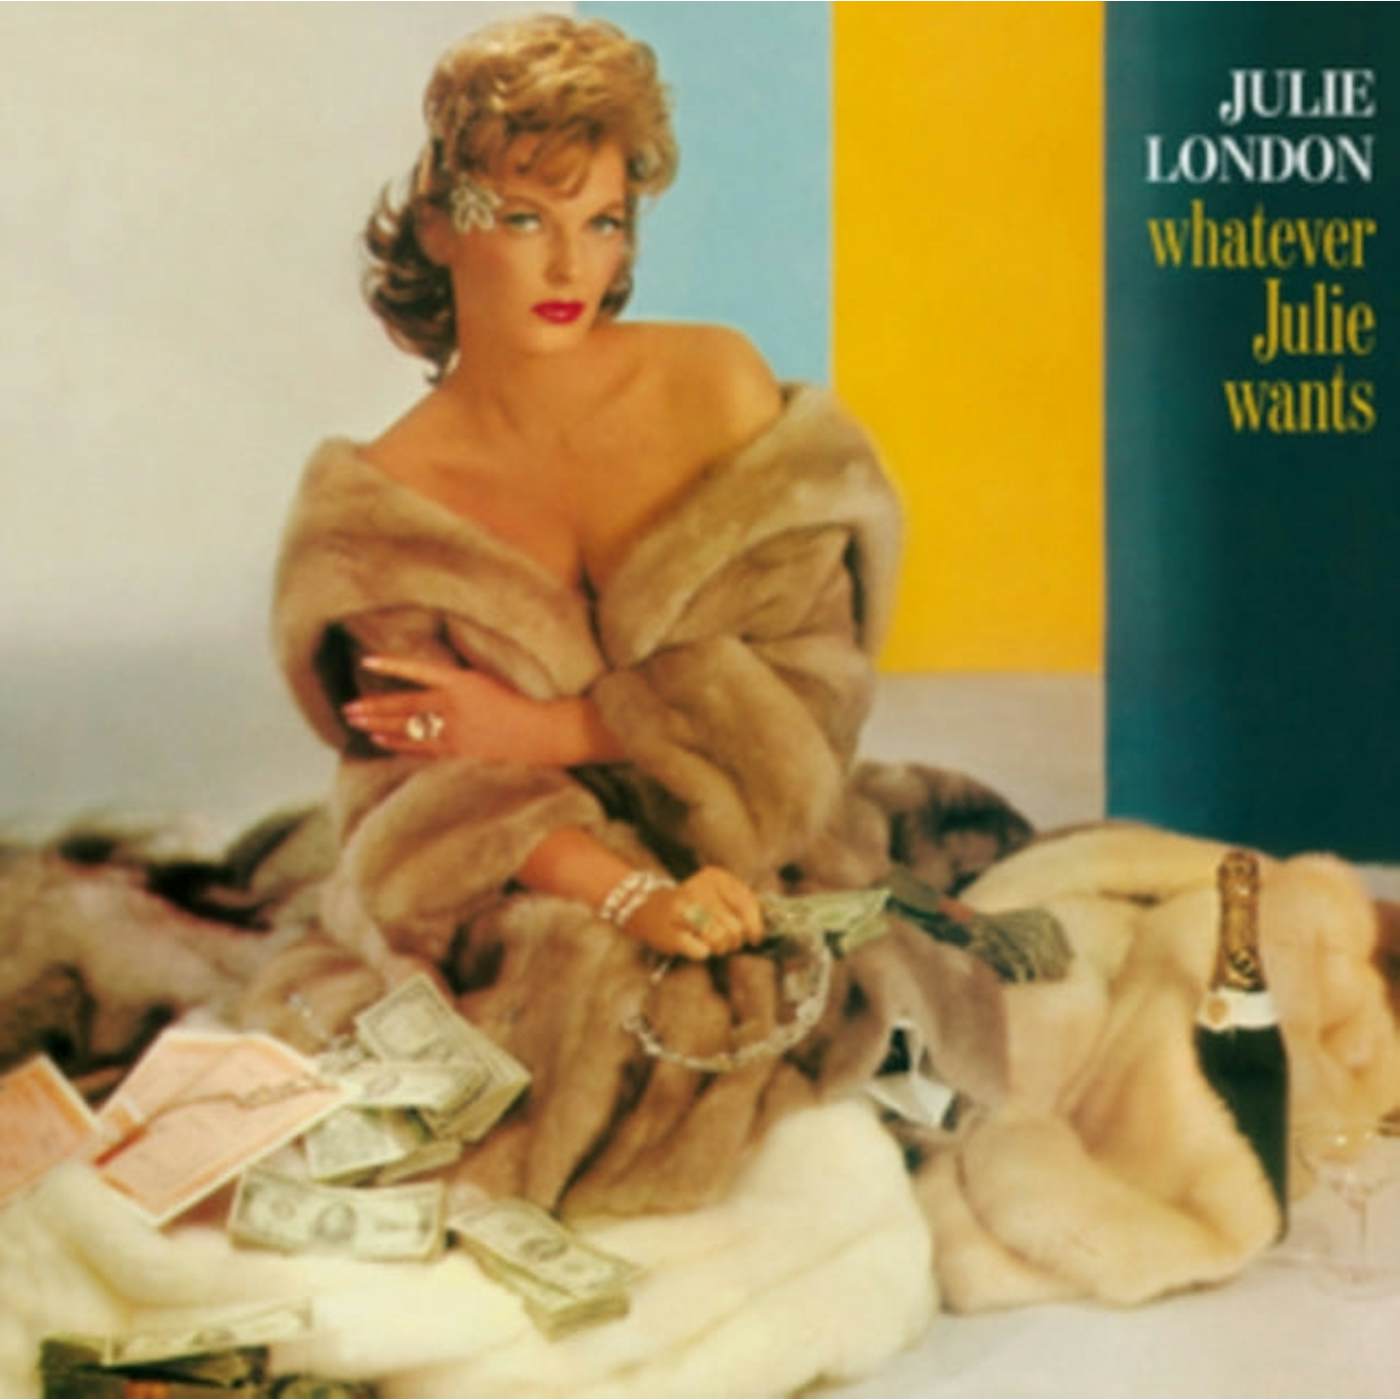 Julie London CD - Whatever Julie Wants